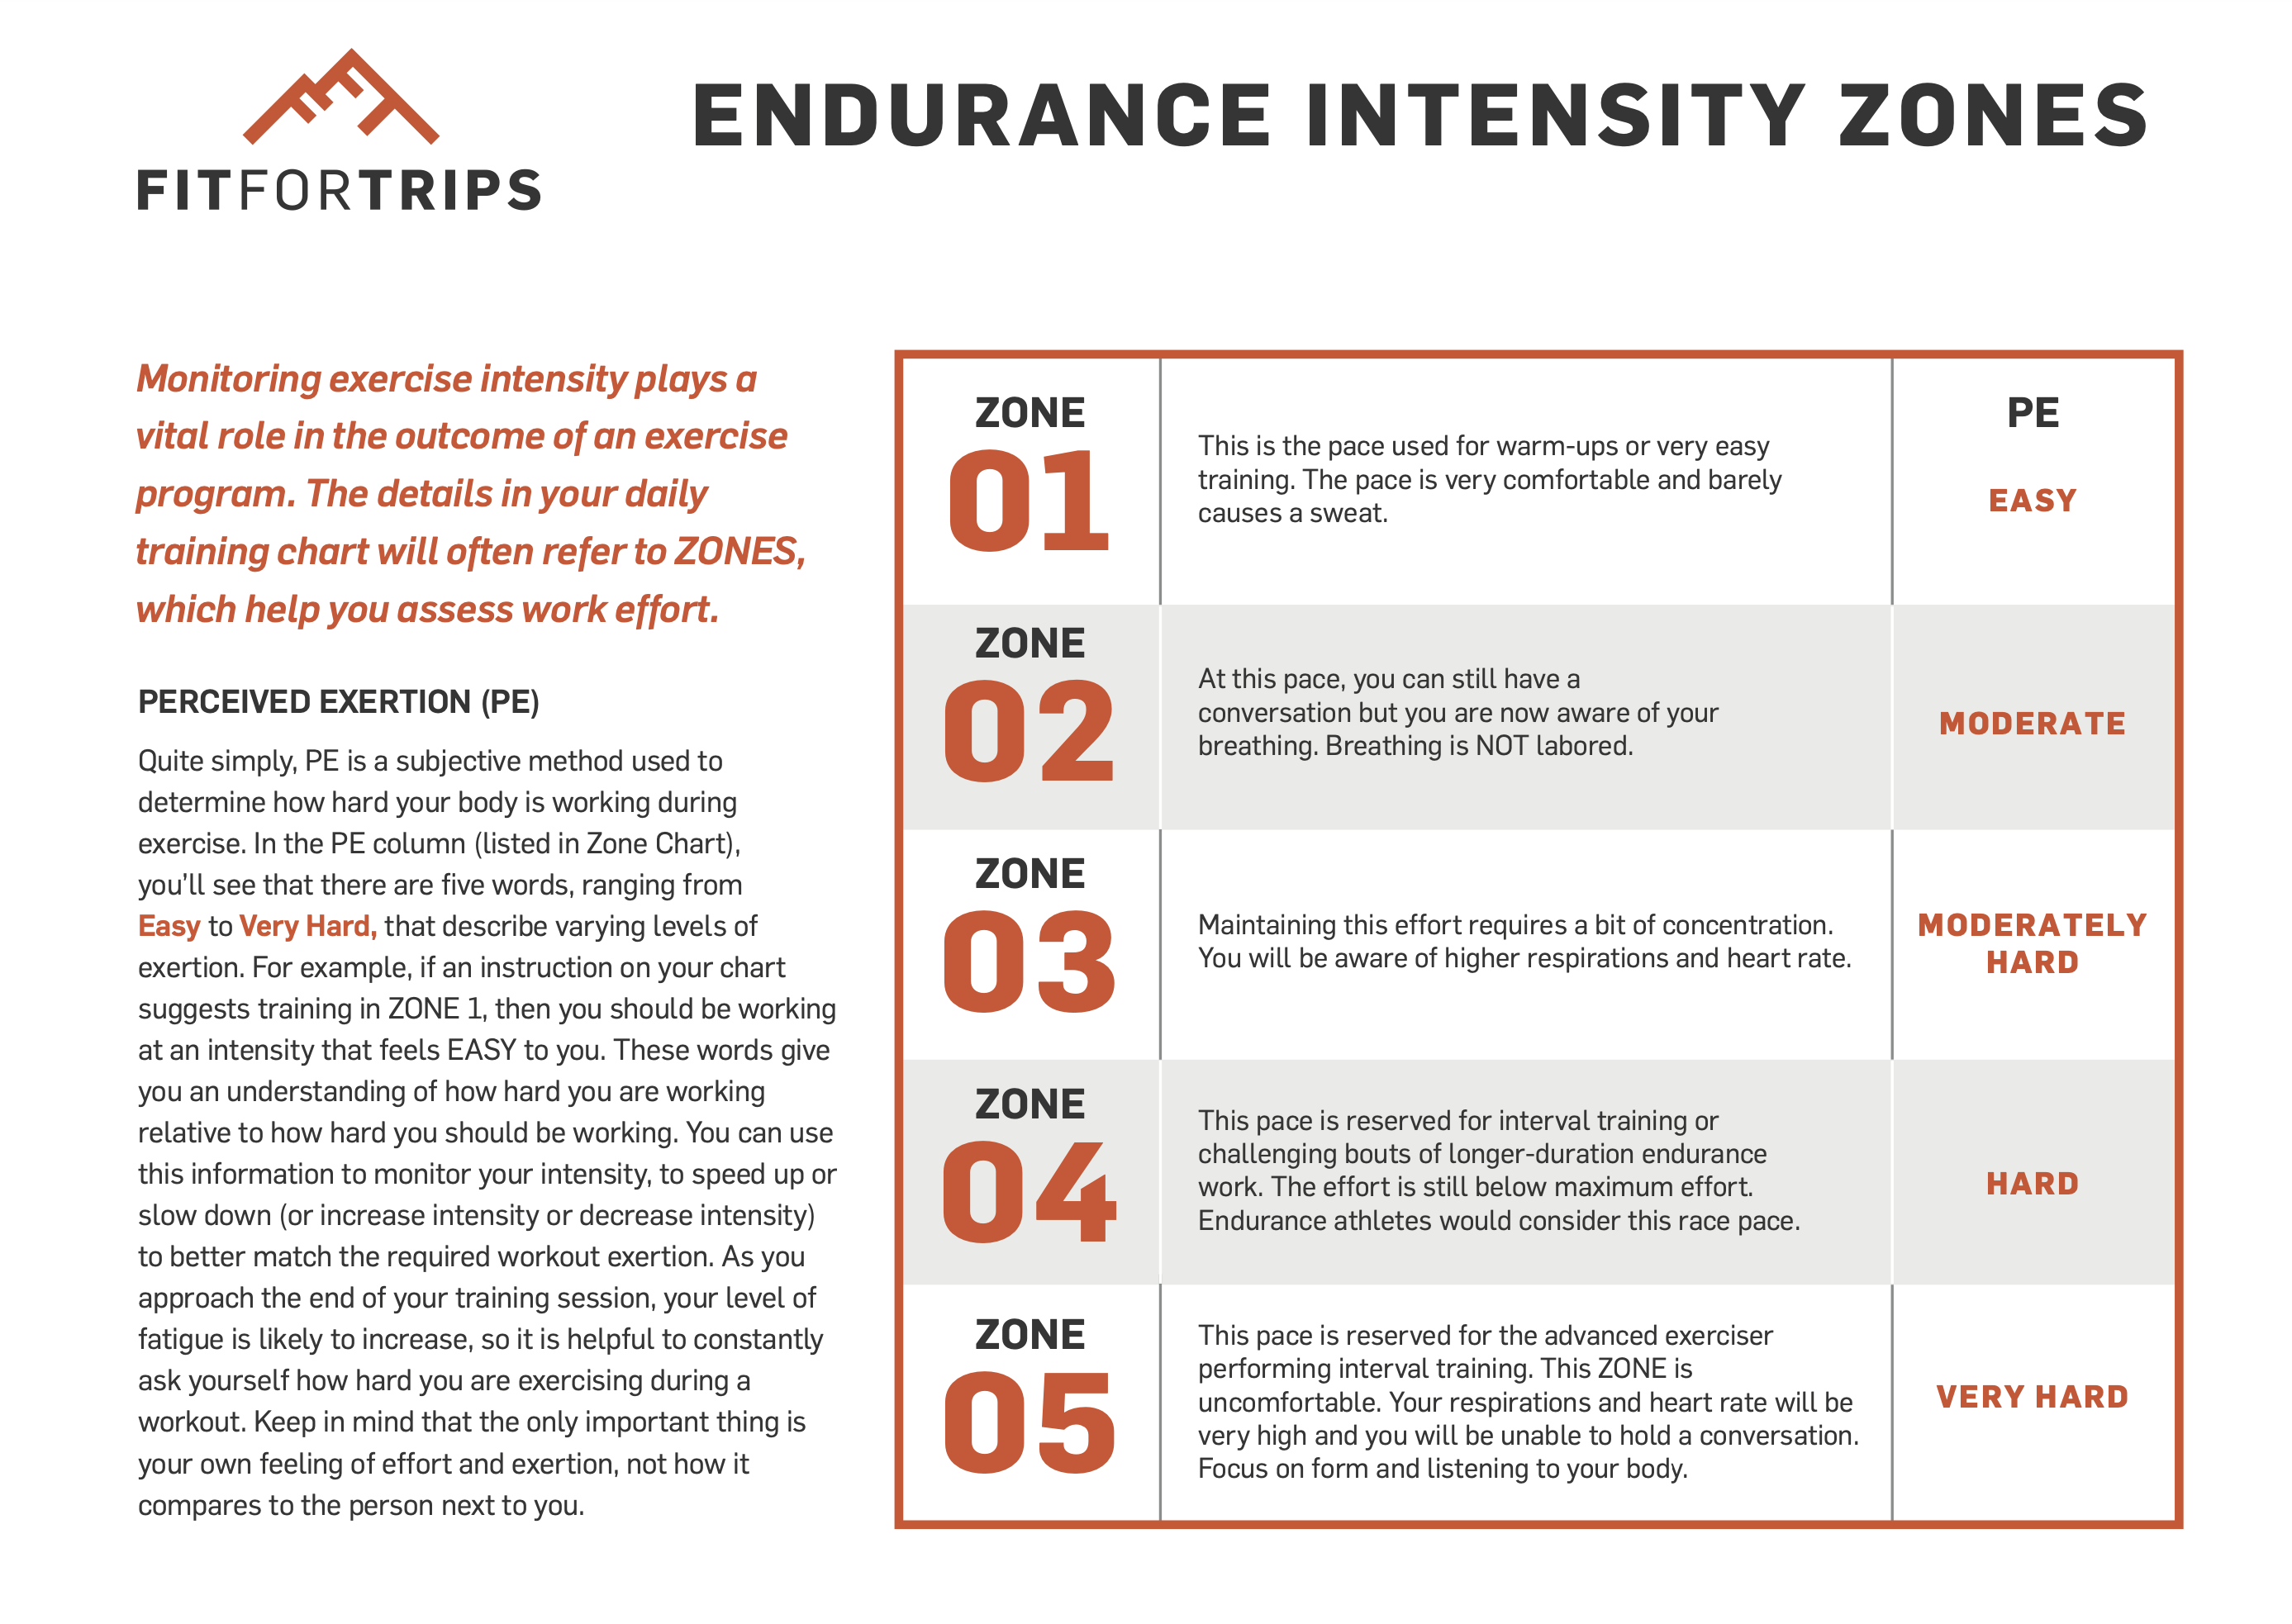 Endurance intensity instructions for Level 1 Hiking Training Plan.